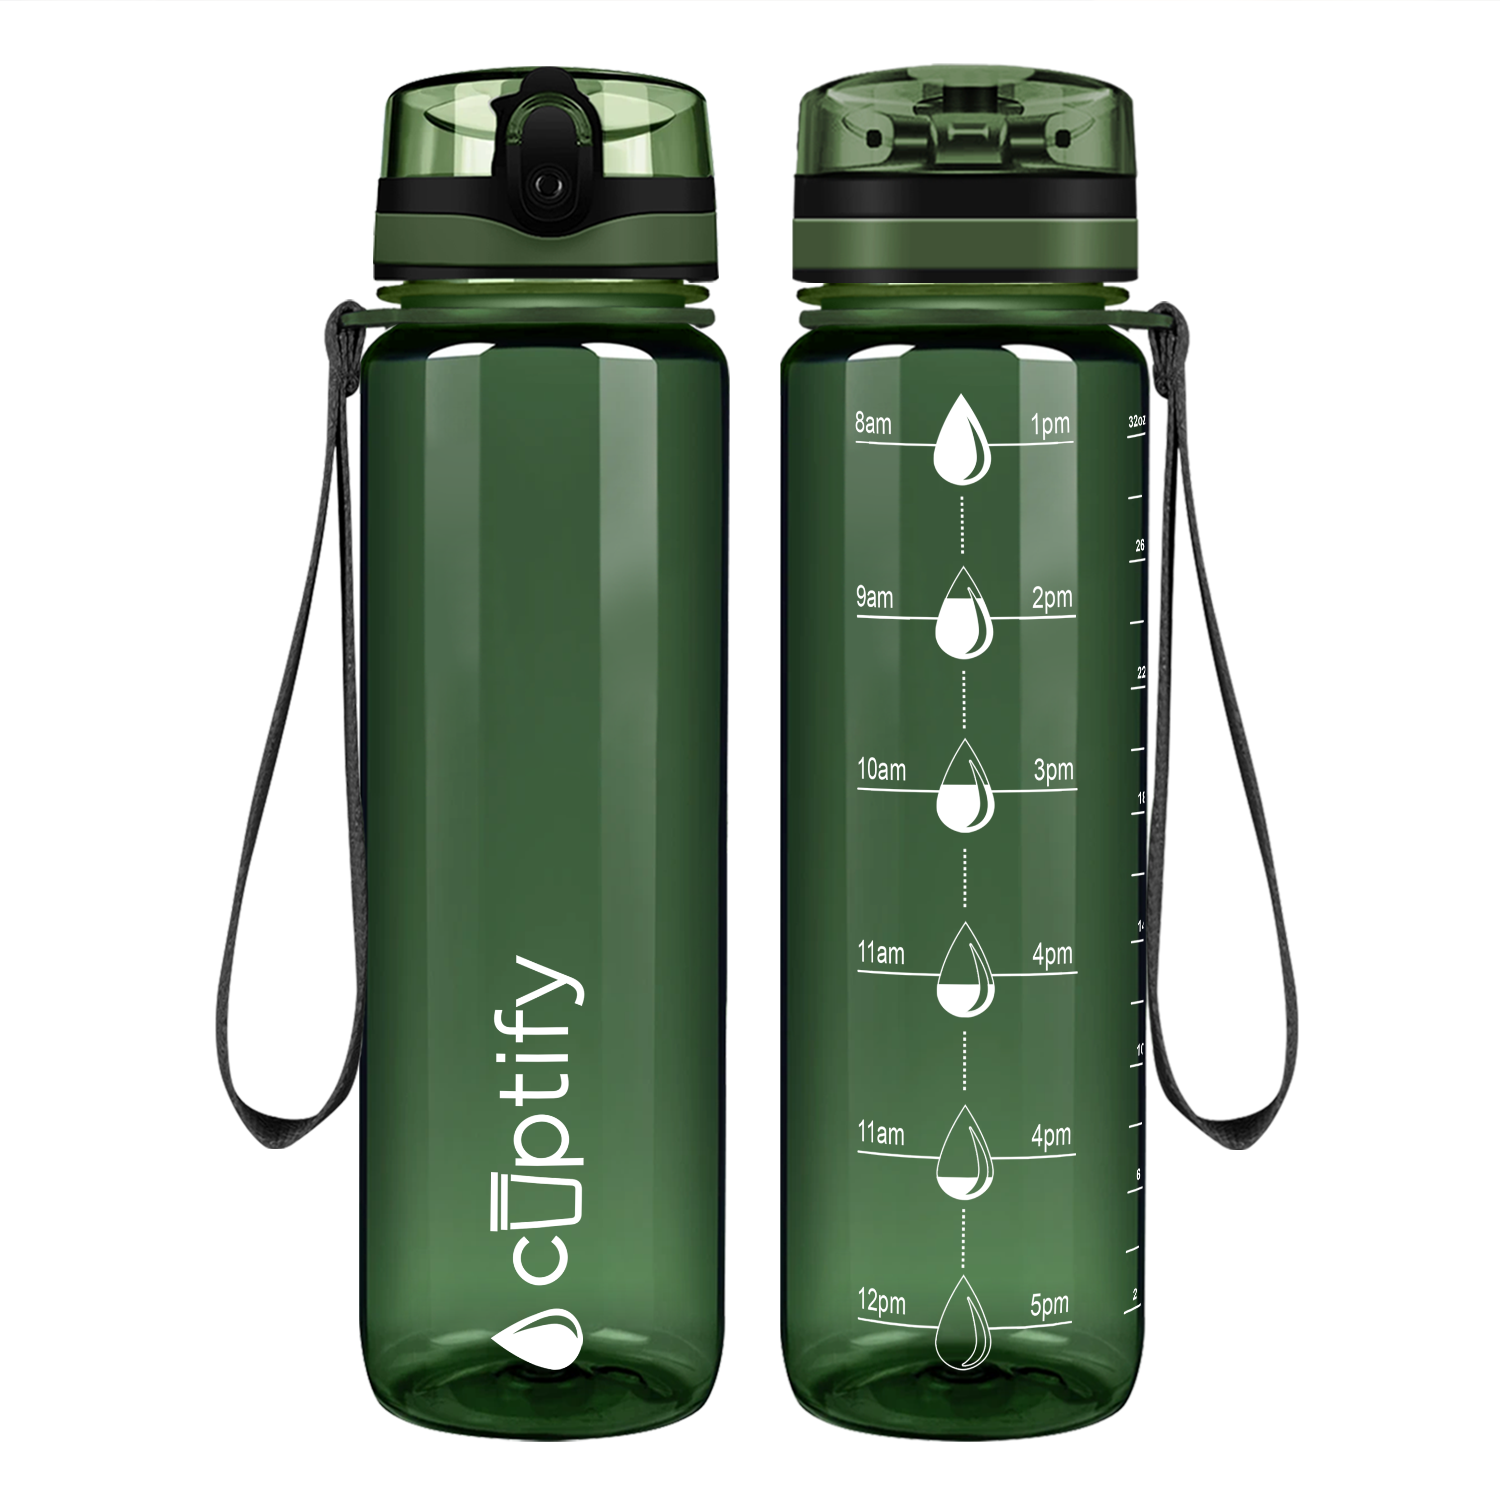 Hydratum8 Hydration Tracker water bottle helps track daily water